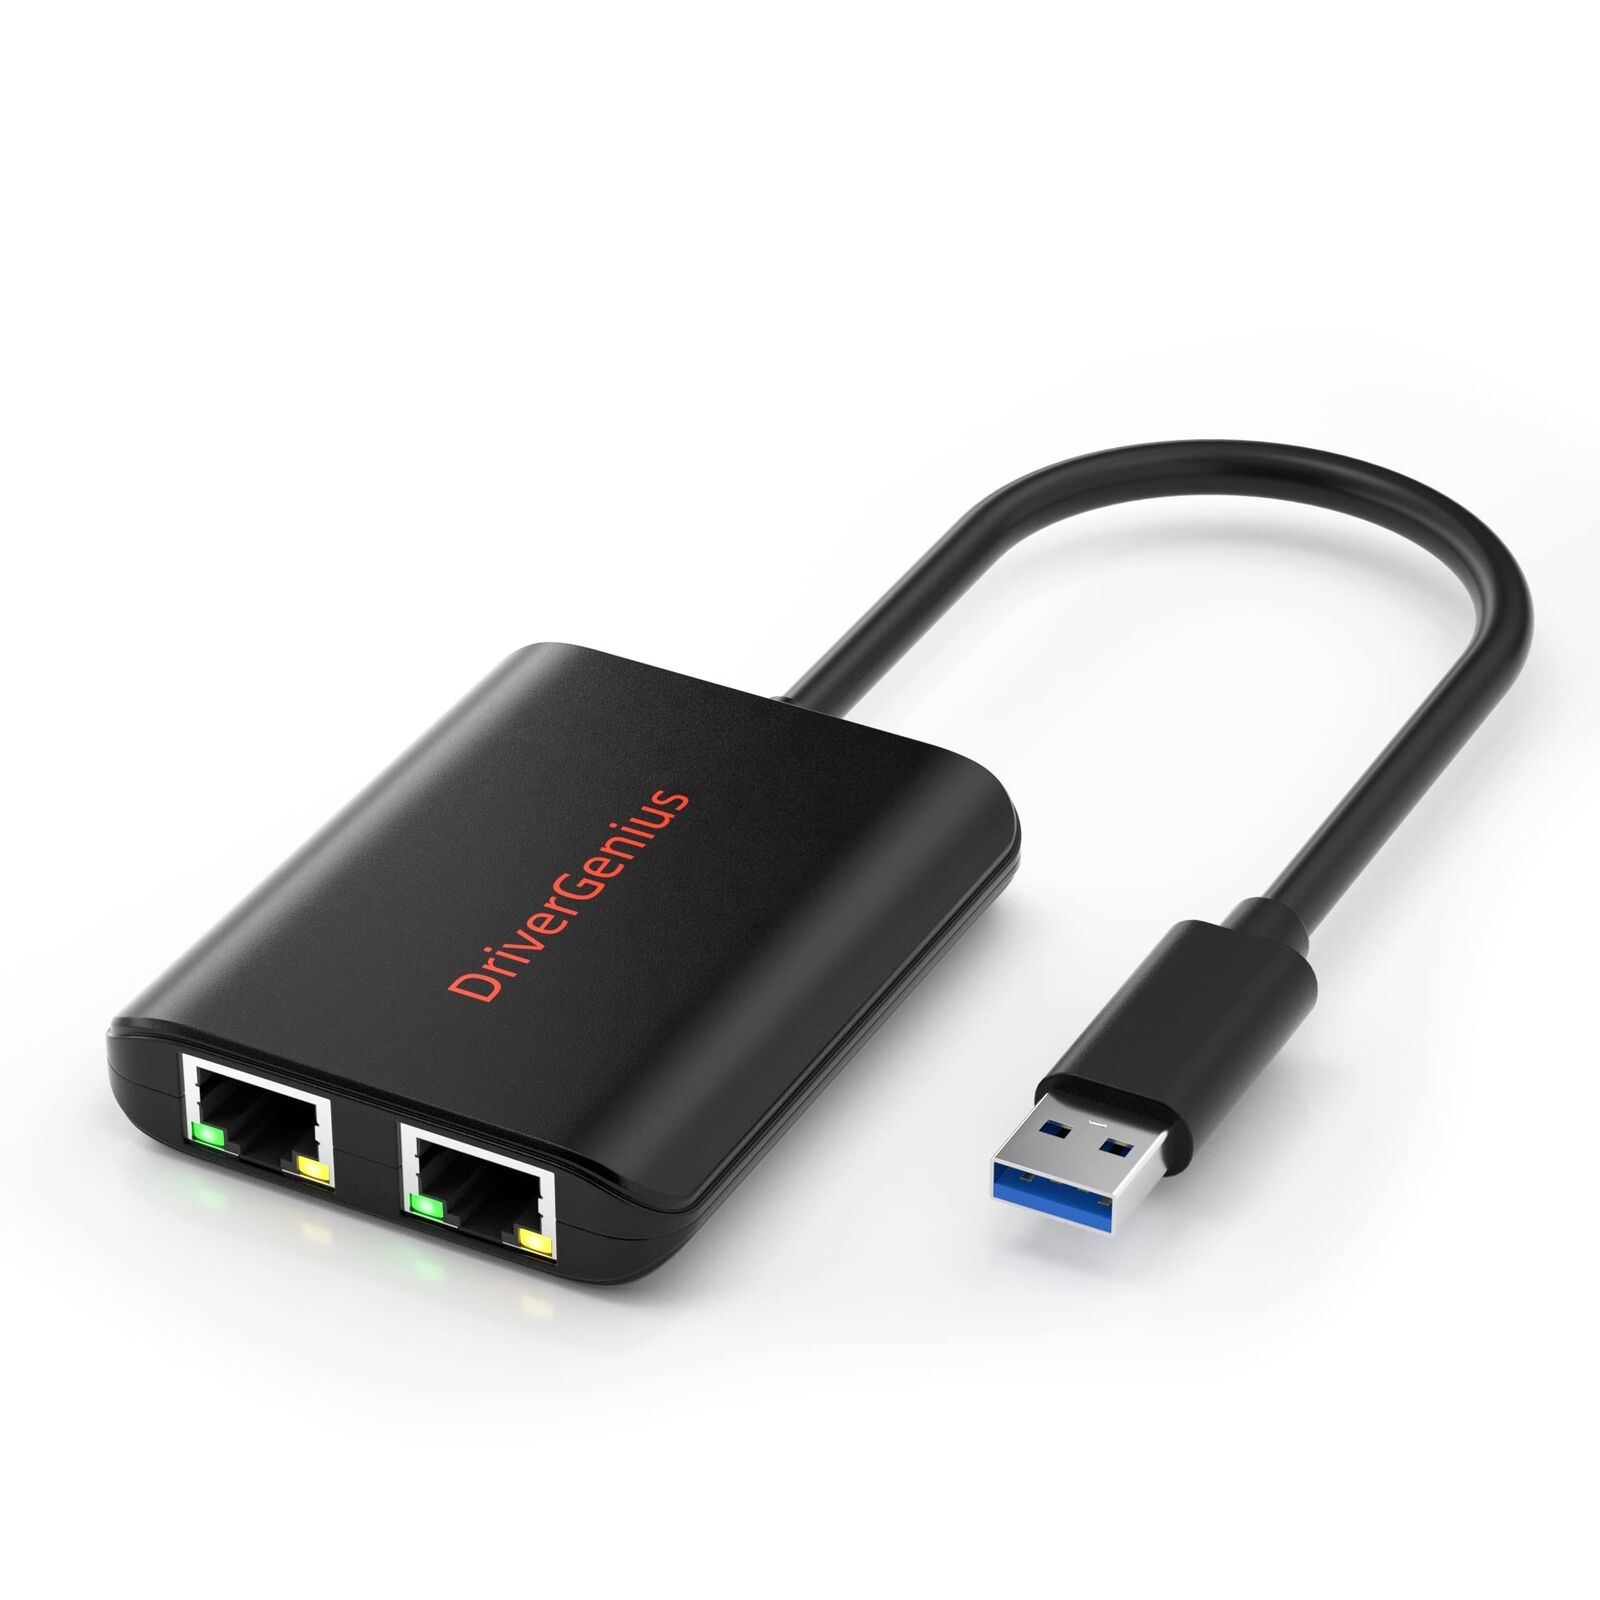 DriverGenius USB 3.0 to Dual Port Gigabit Ethernet Adapter NIC w/USB Port - C...